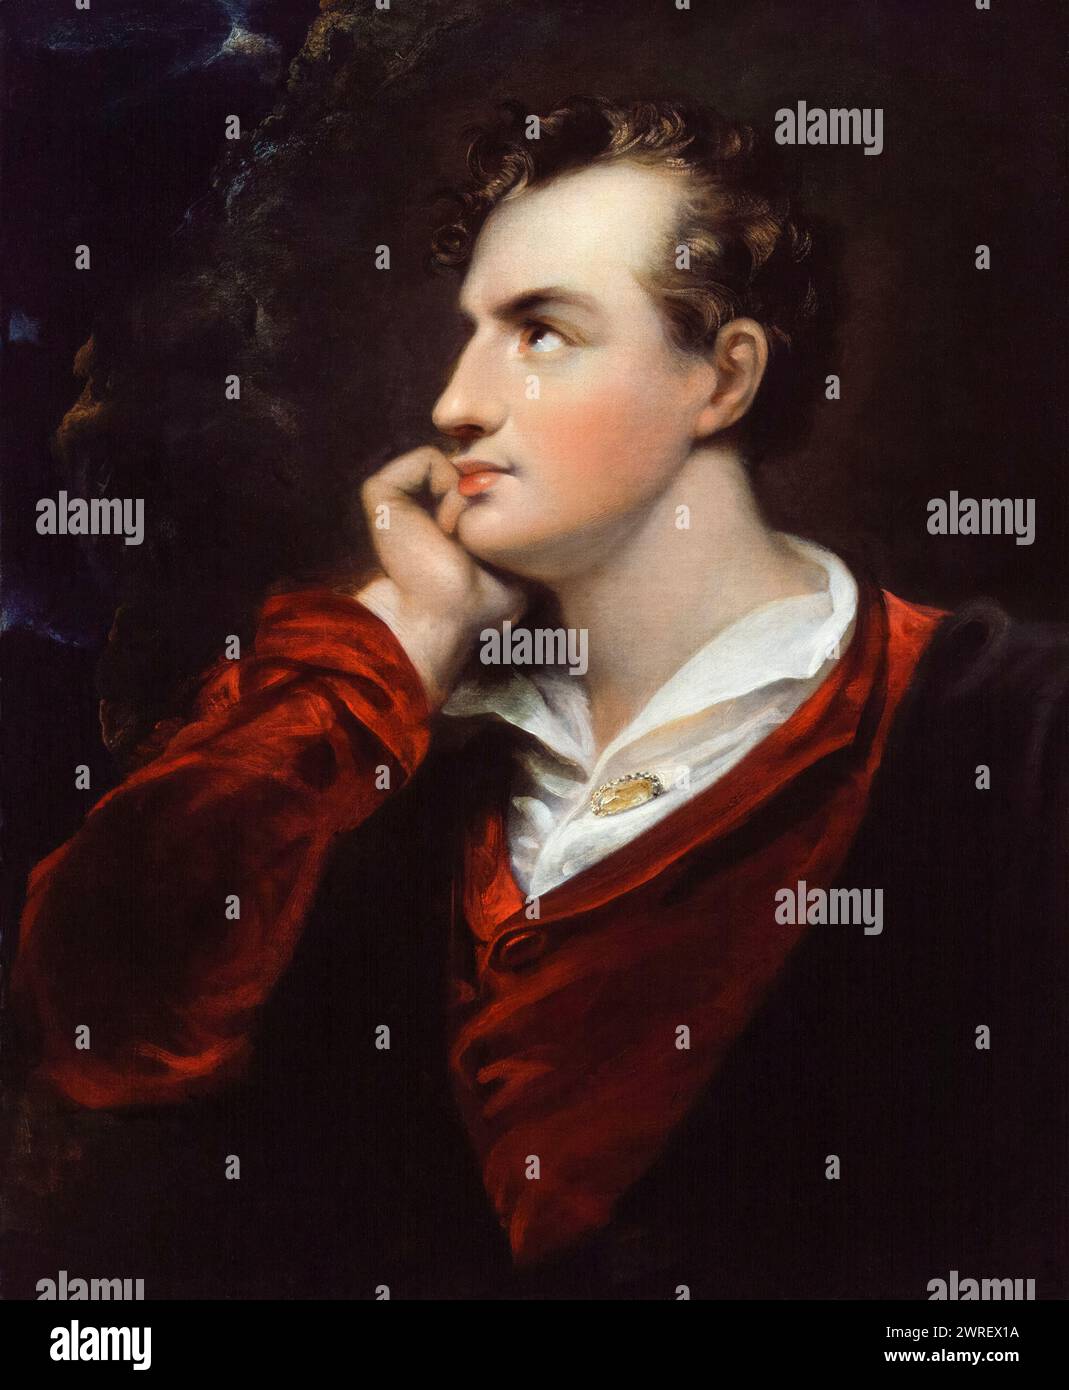 Lord Byron. George Gordon Byron, vi barone Byron (1788-1824), poeta romantico inglese, ritratto a olio su tela dopo Richard Westall, circa 1813 Foto Stock